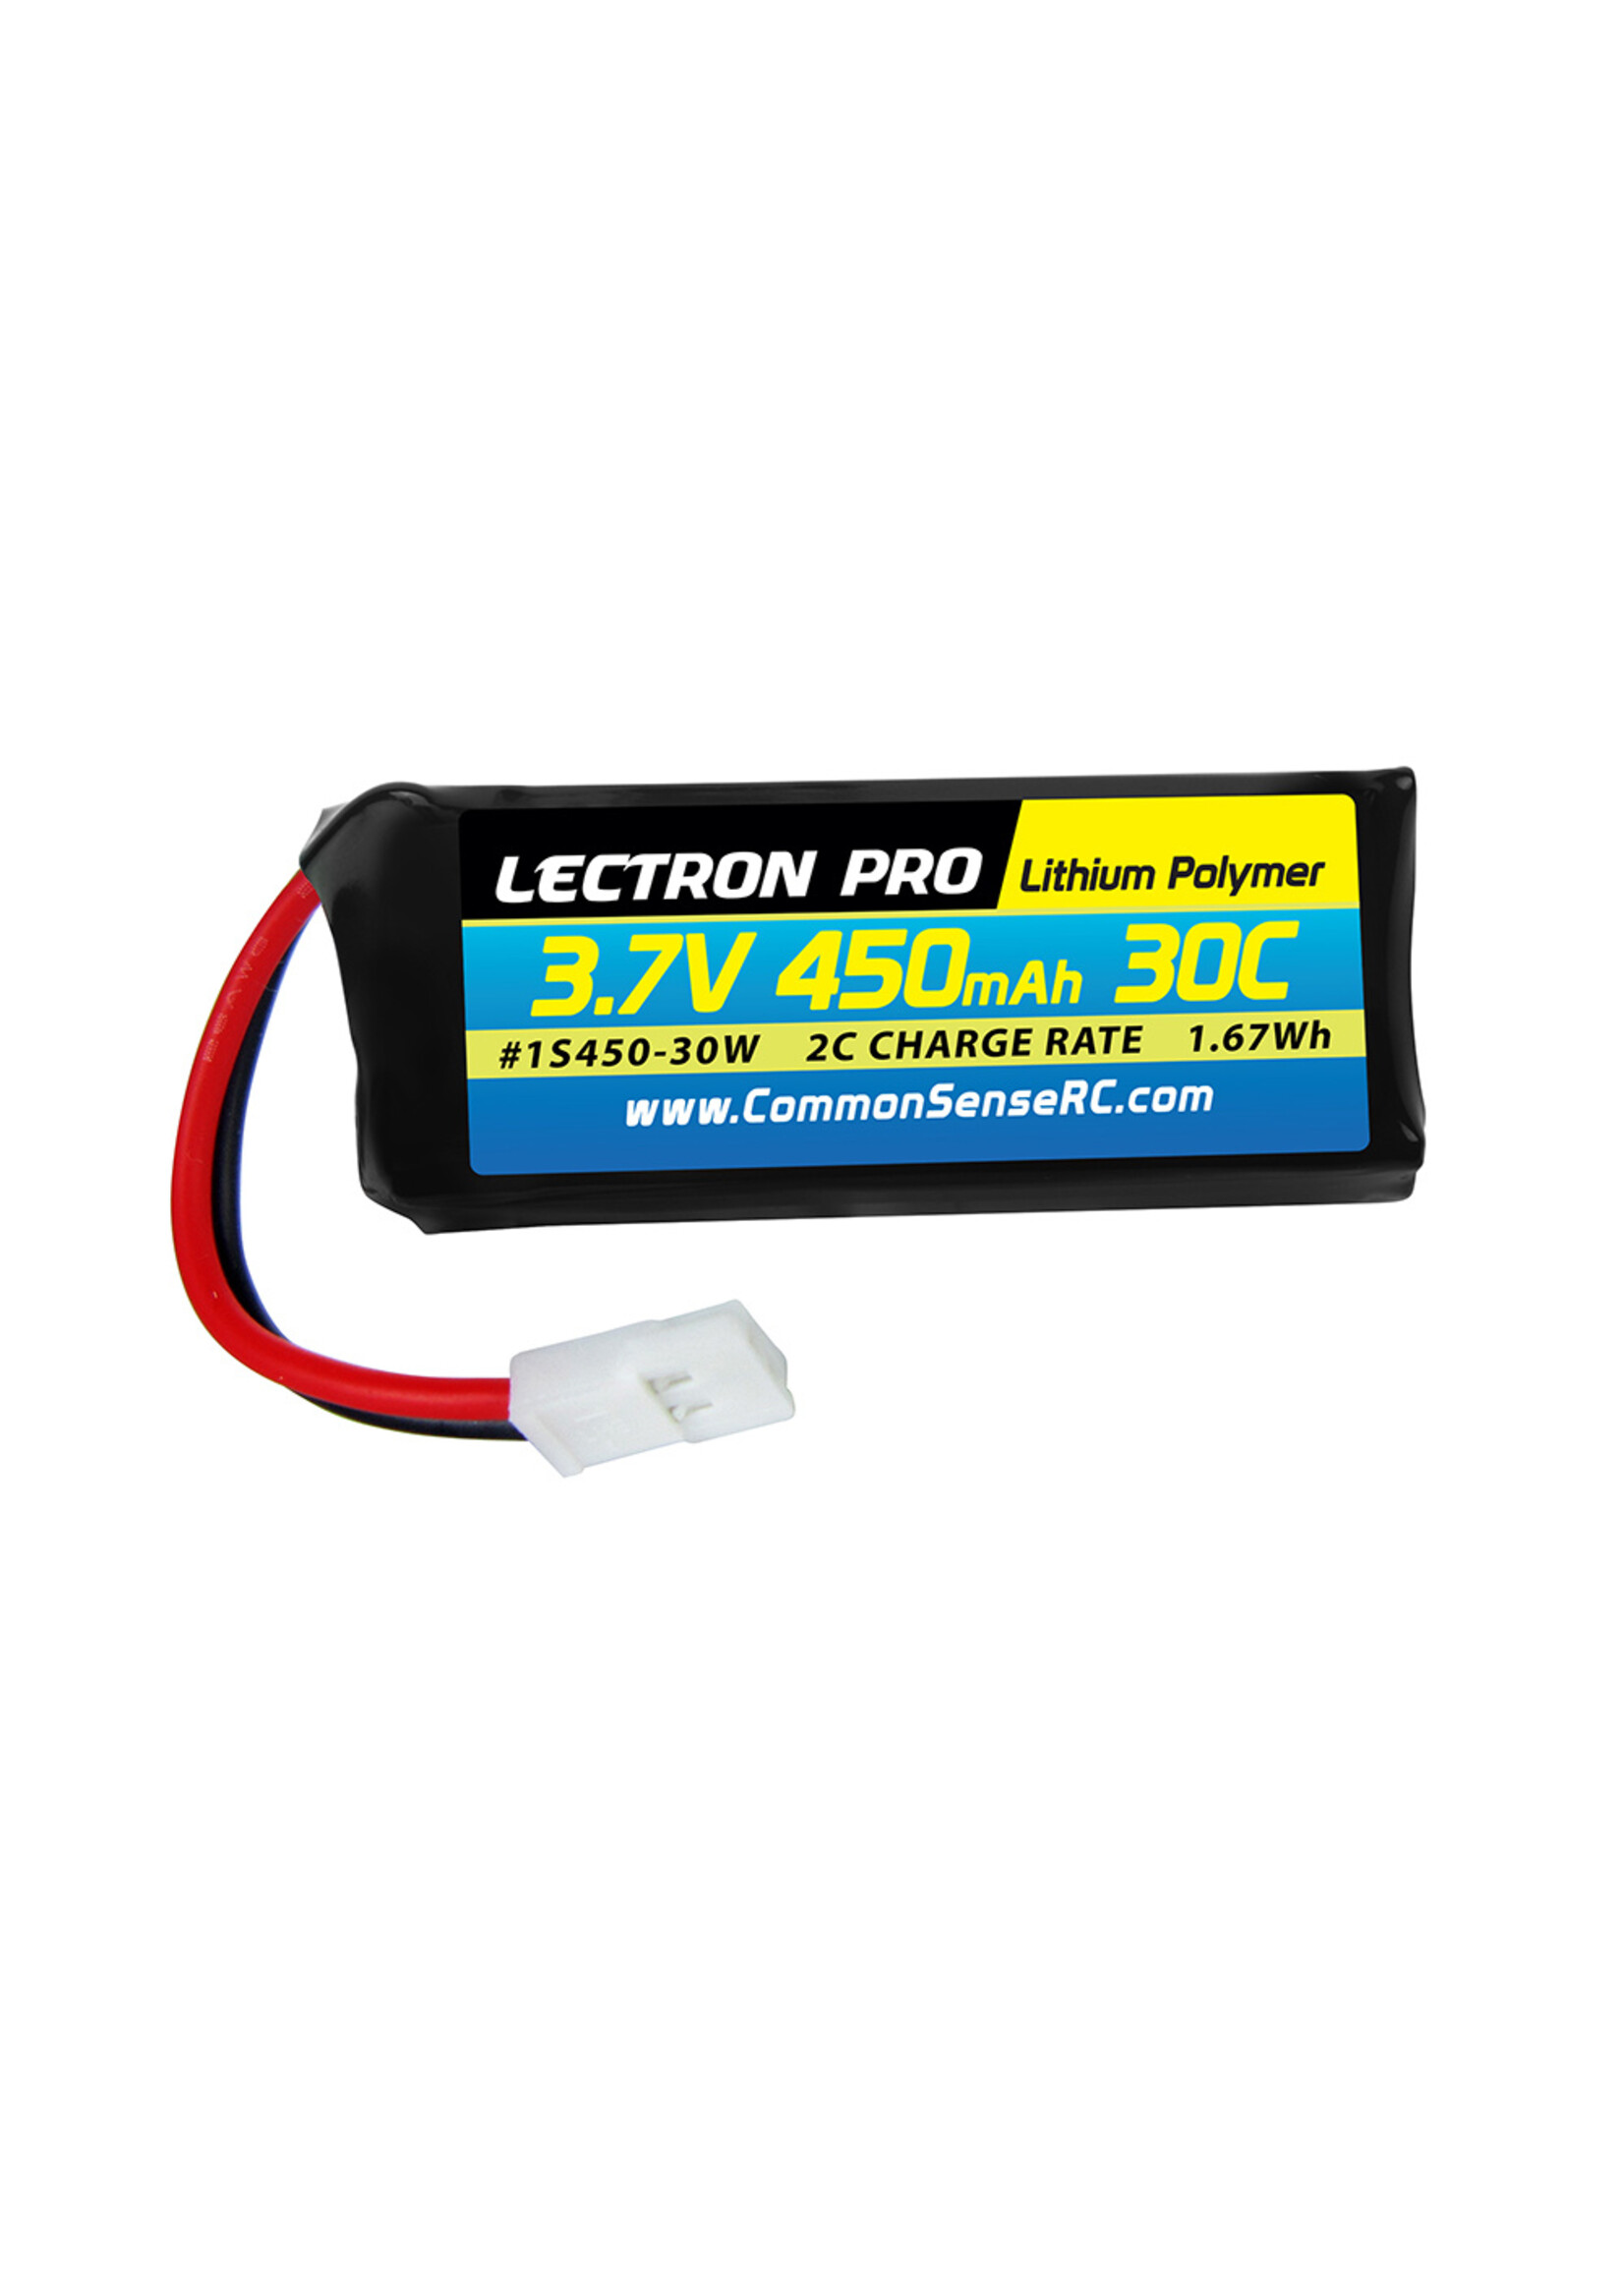 Common Sense RC Lectron Pro 3.7V 450mAh 30C LiPo Battery w/ Walkera Connector